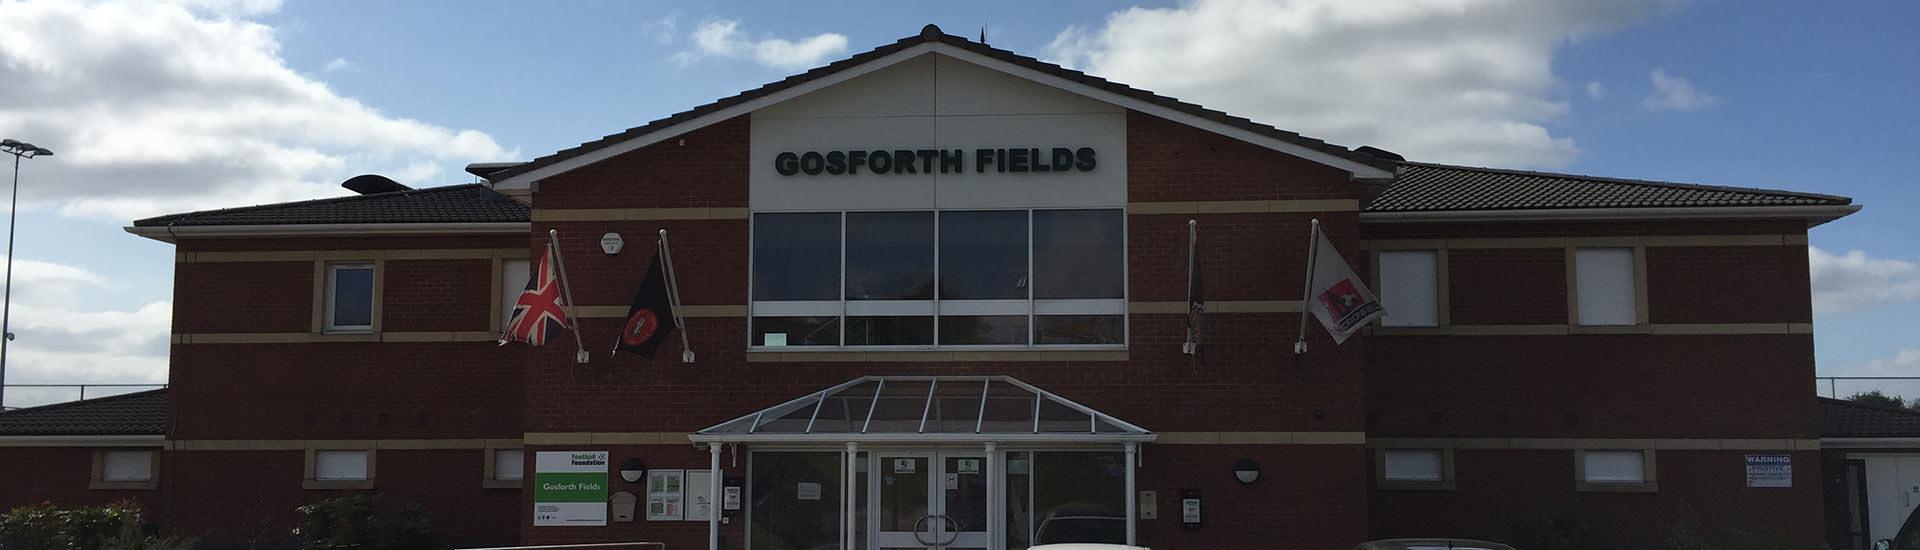 Gosforth Fields - Image